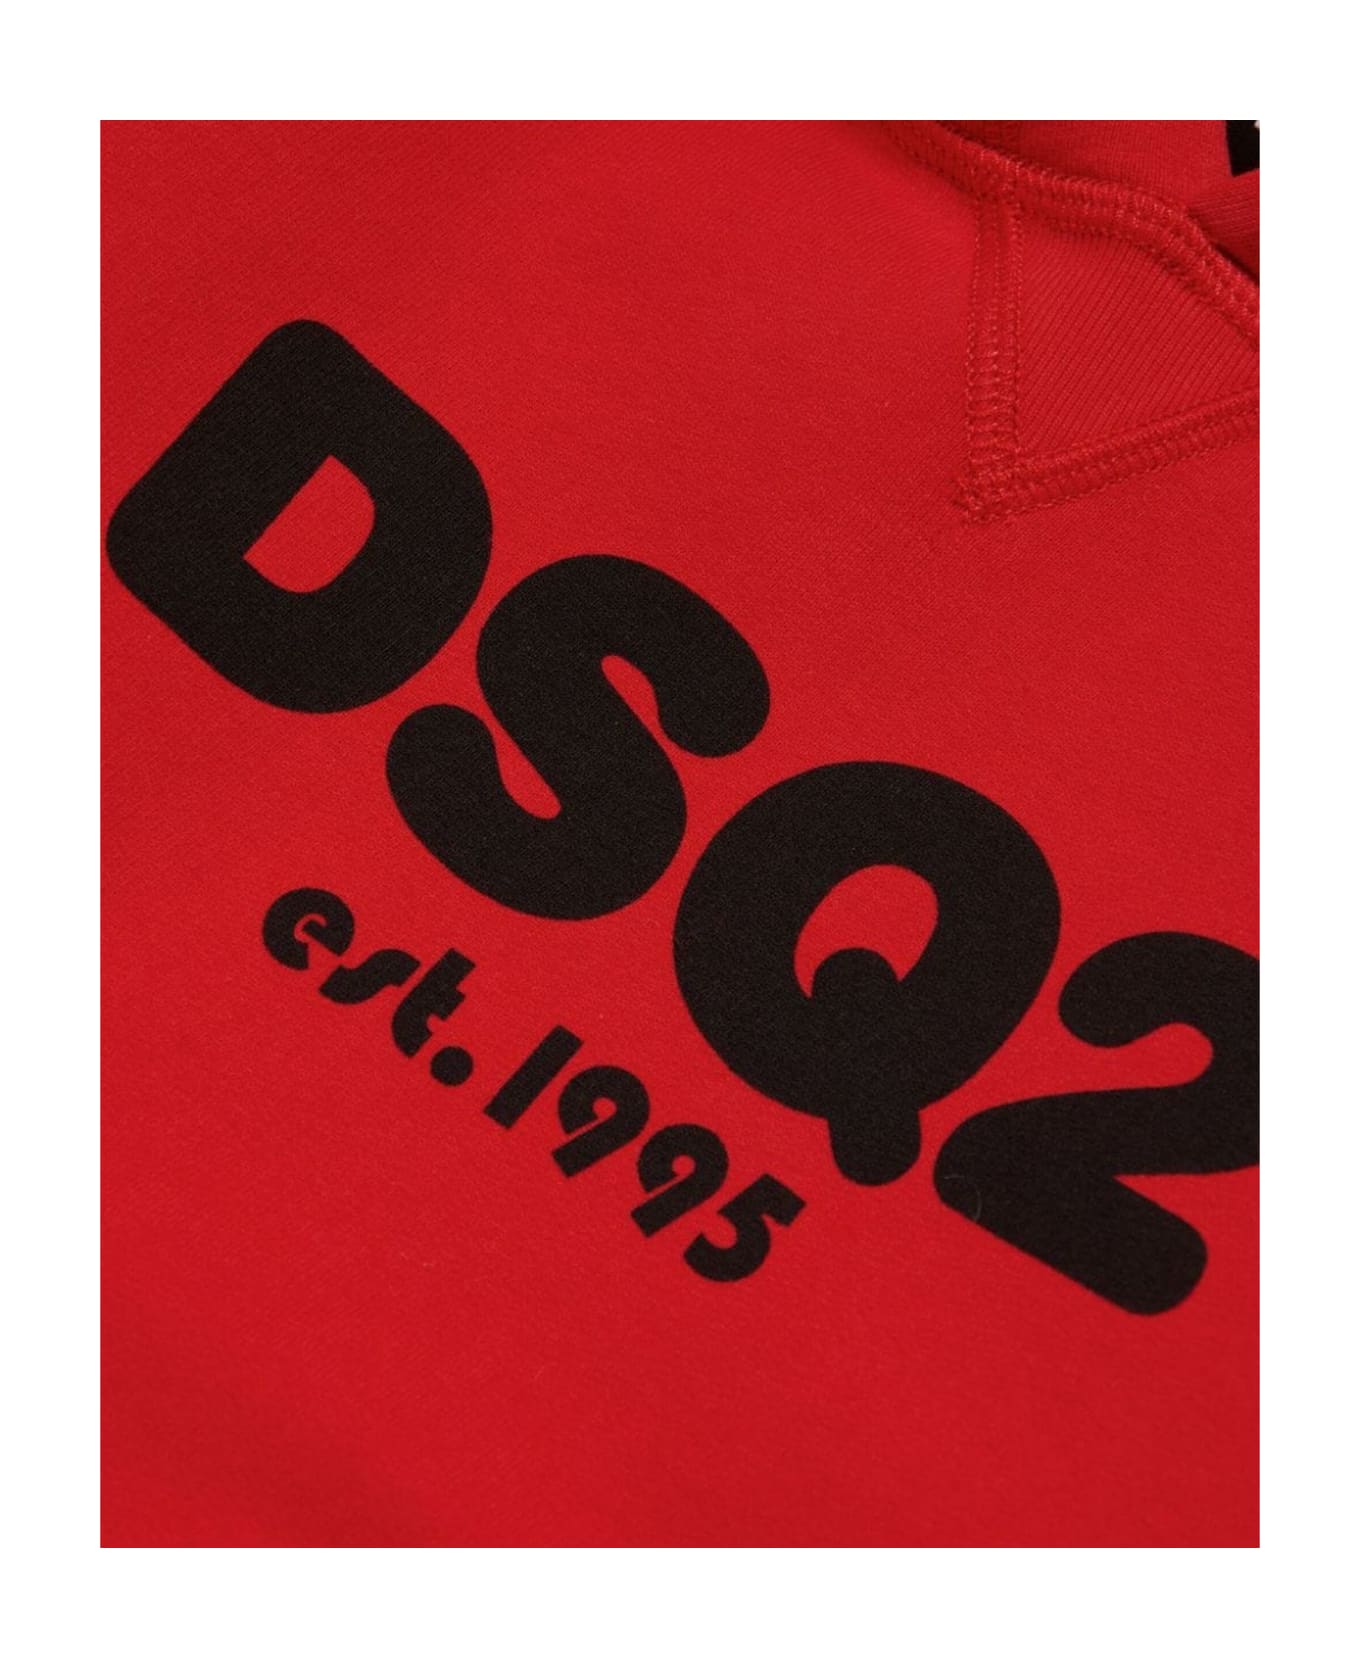 Dsquared2 Sweaters Red - Red ニットウェア＆スウェットシャツ